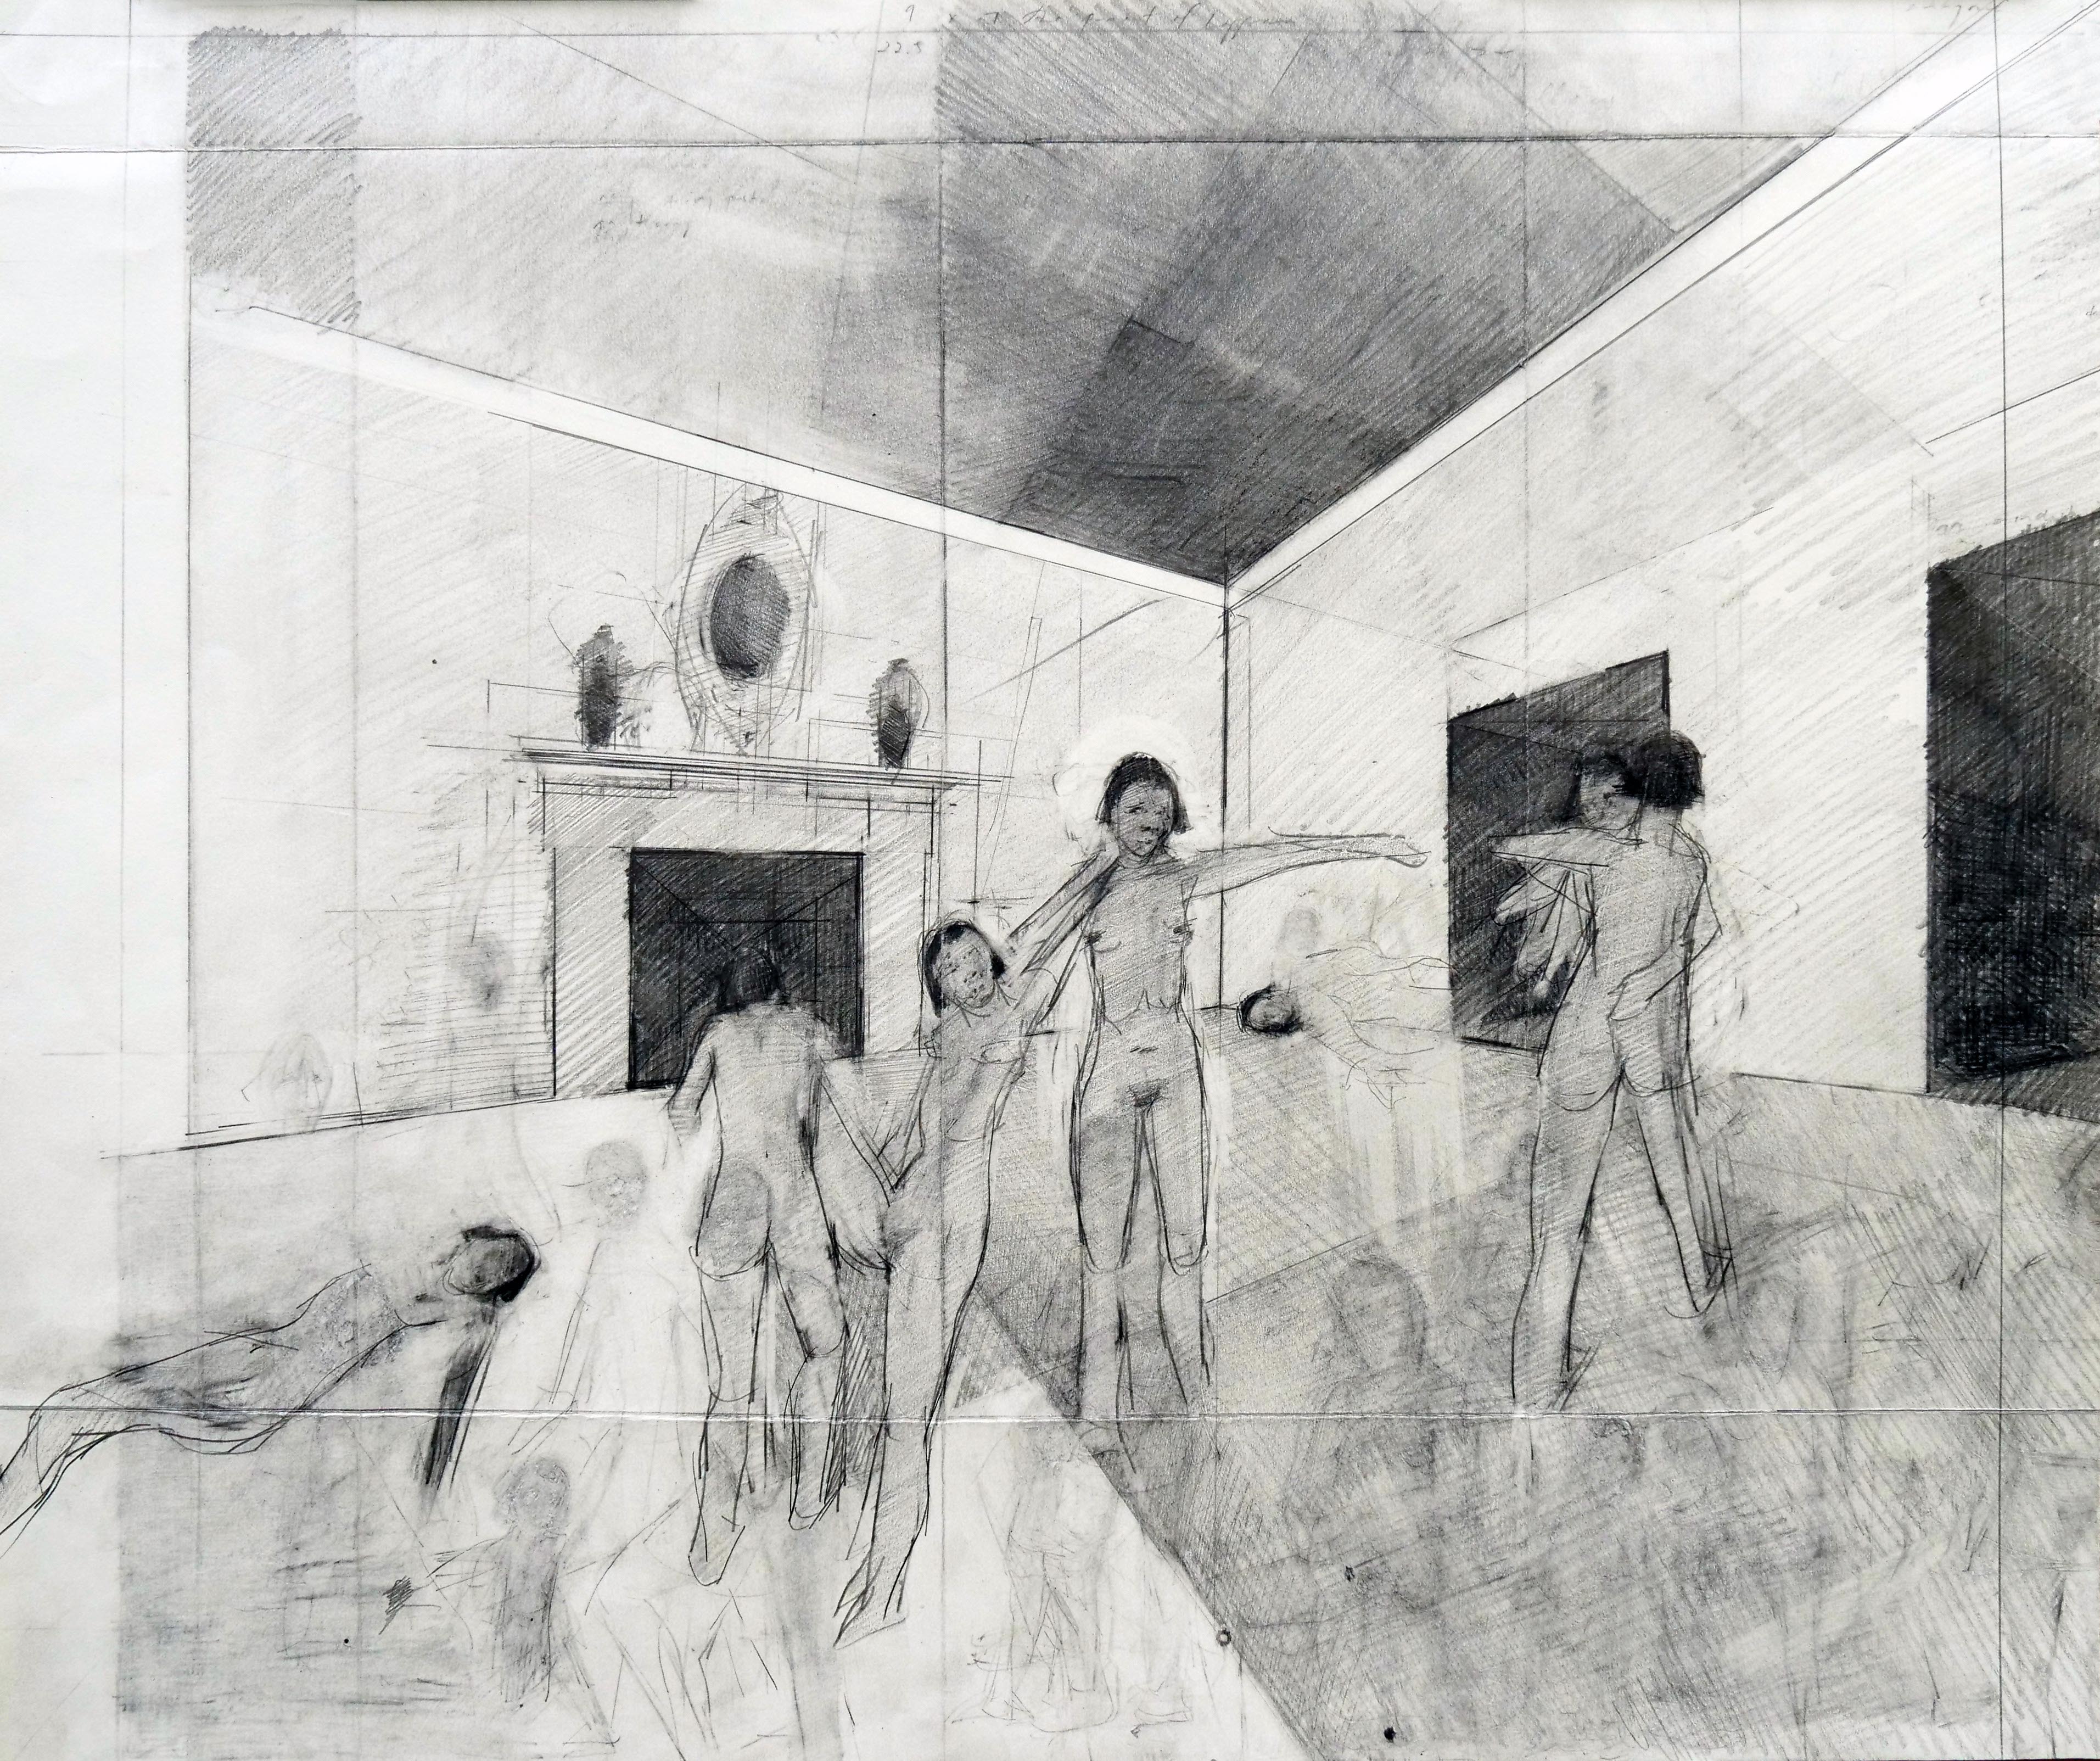 Genevieve DeLeon, Untitled 1, 2020, Pencil on paper